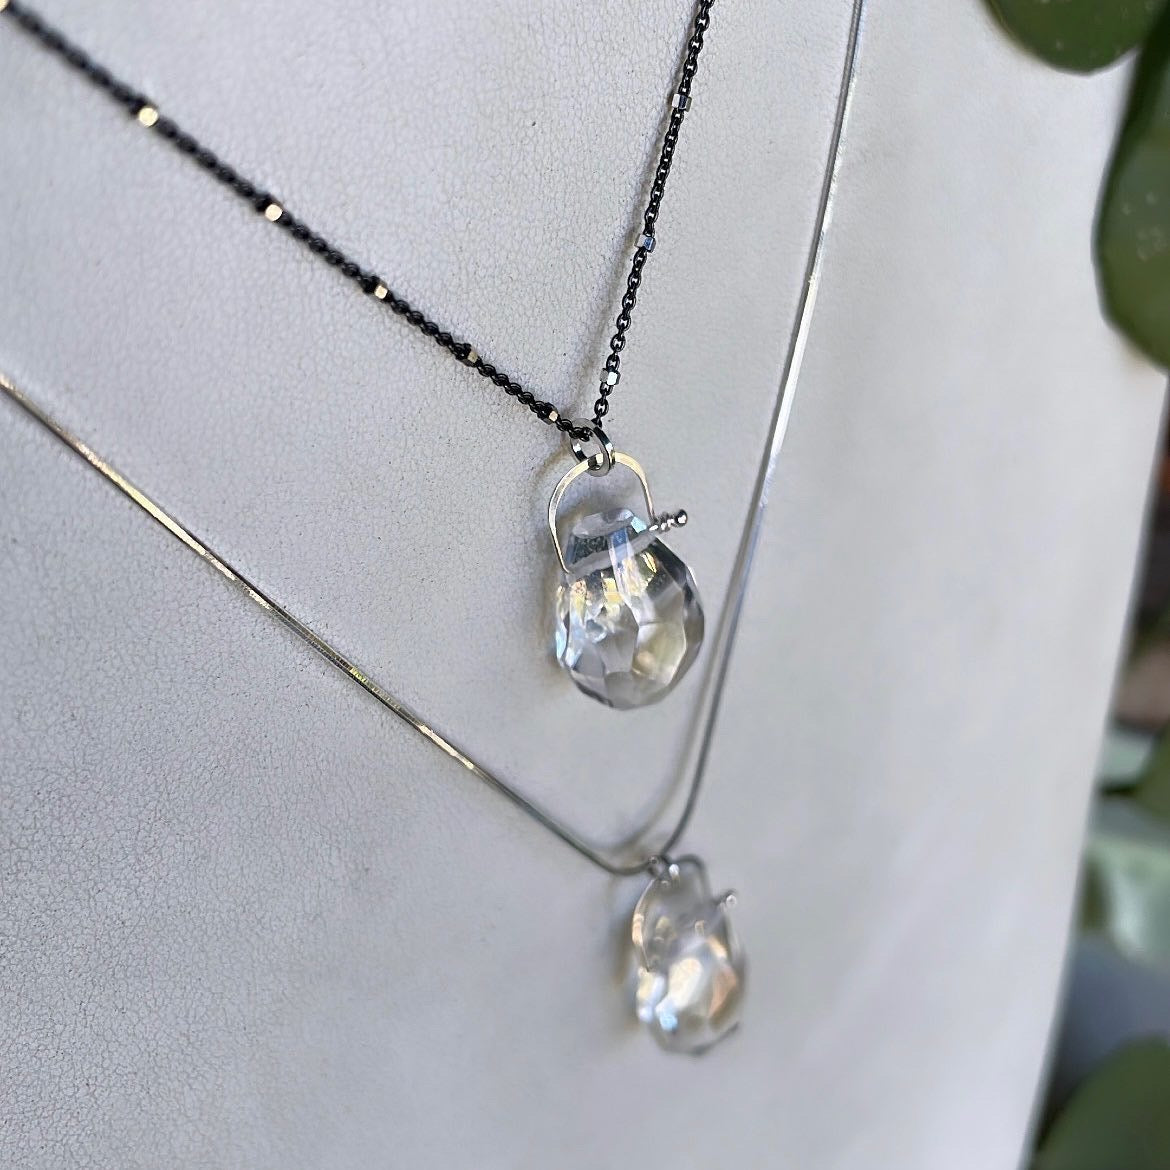 Stirrup quartz crystal necklace-serena kojimoto studio